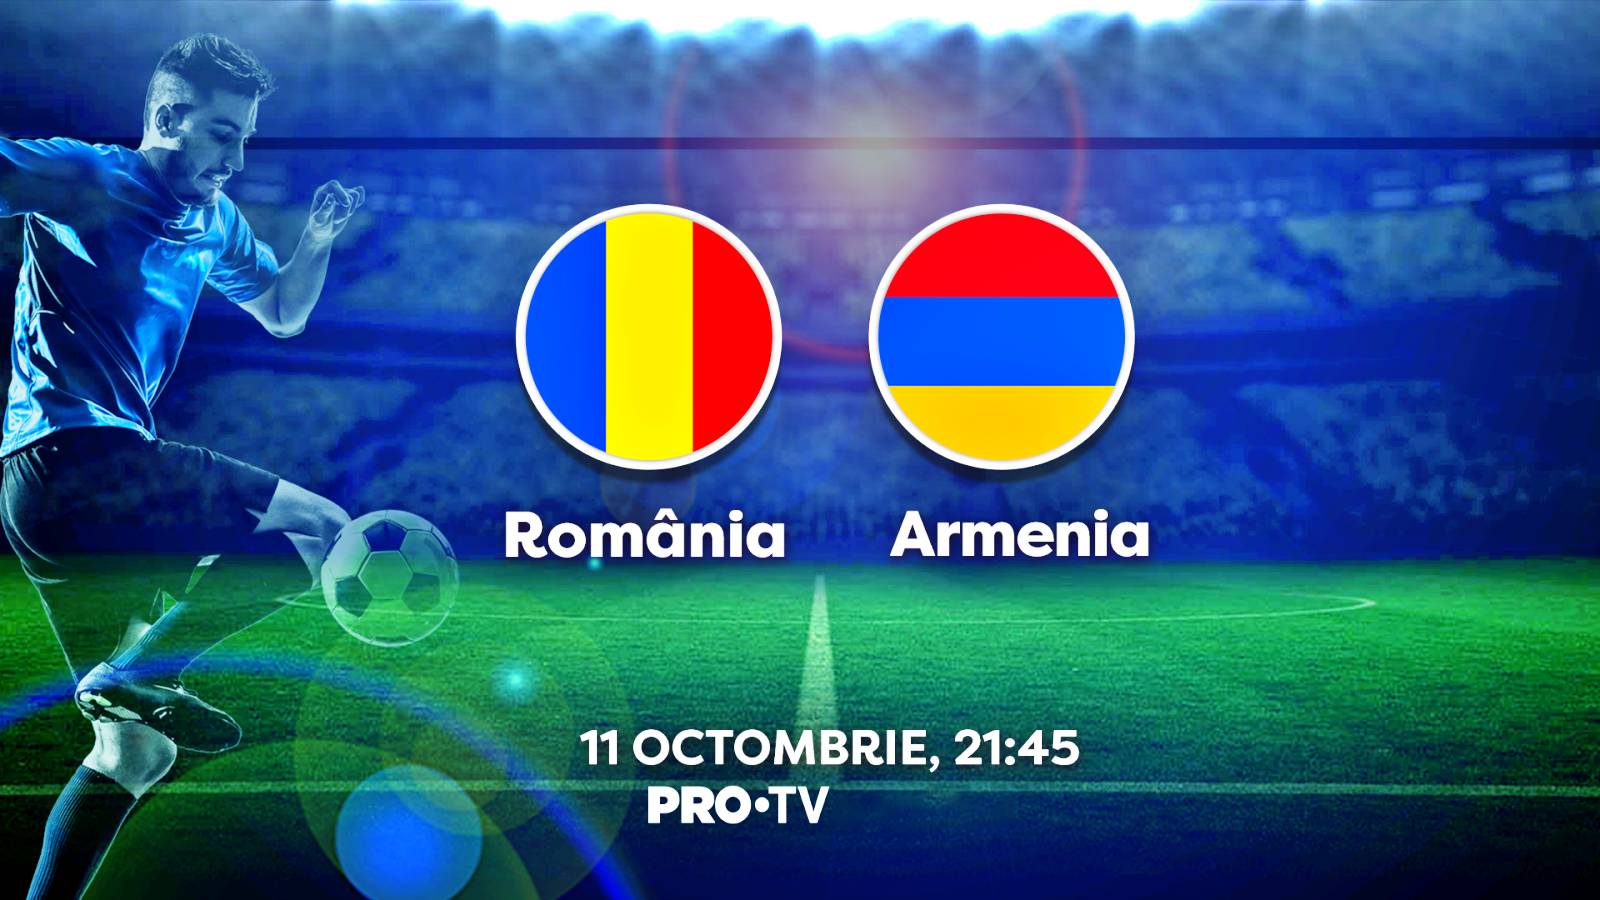 RUMUNIA - ARMENIA LIVE PRO TV